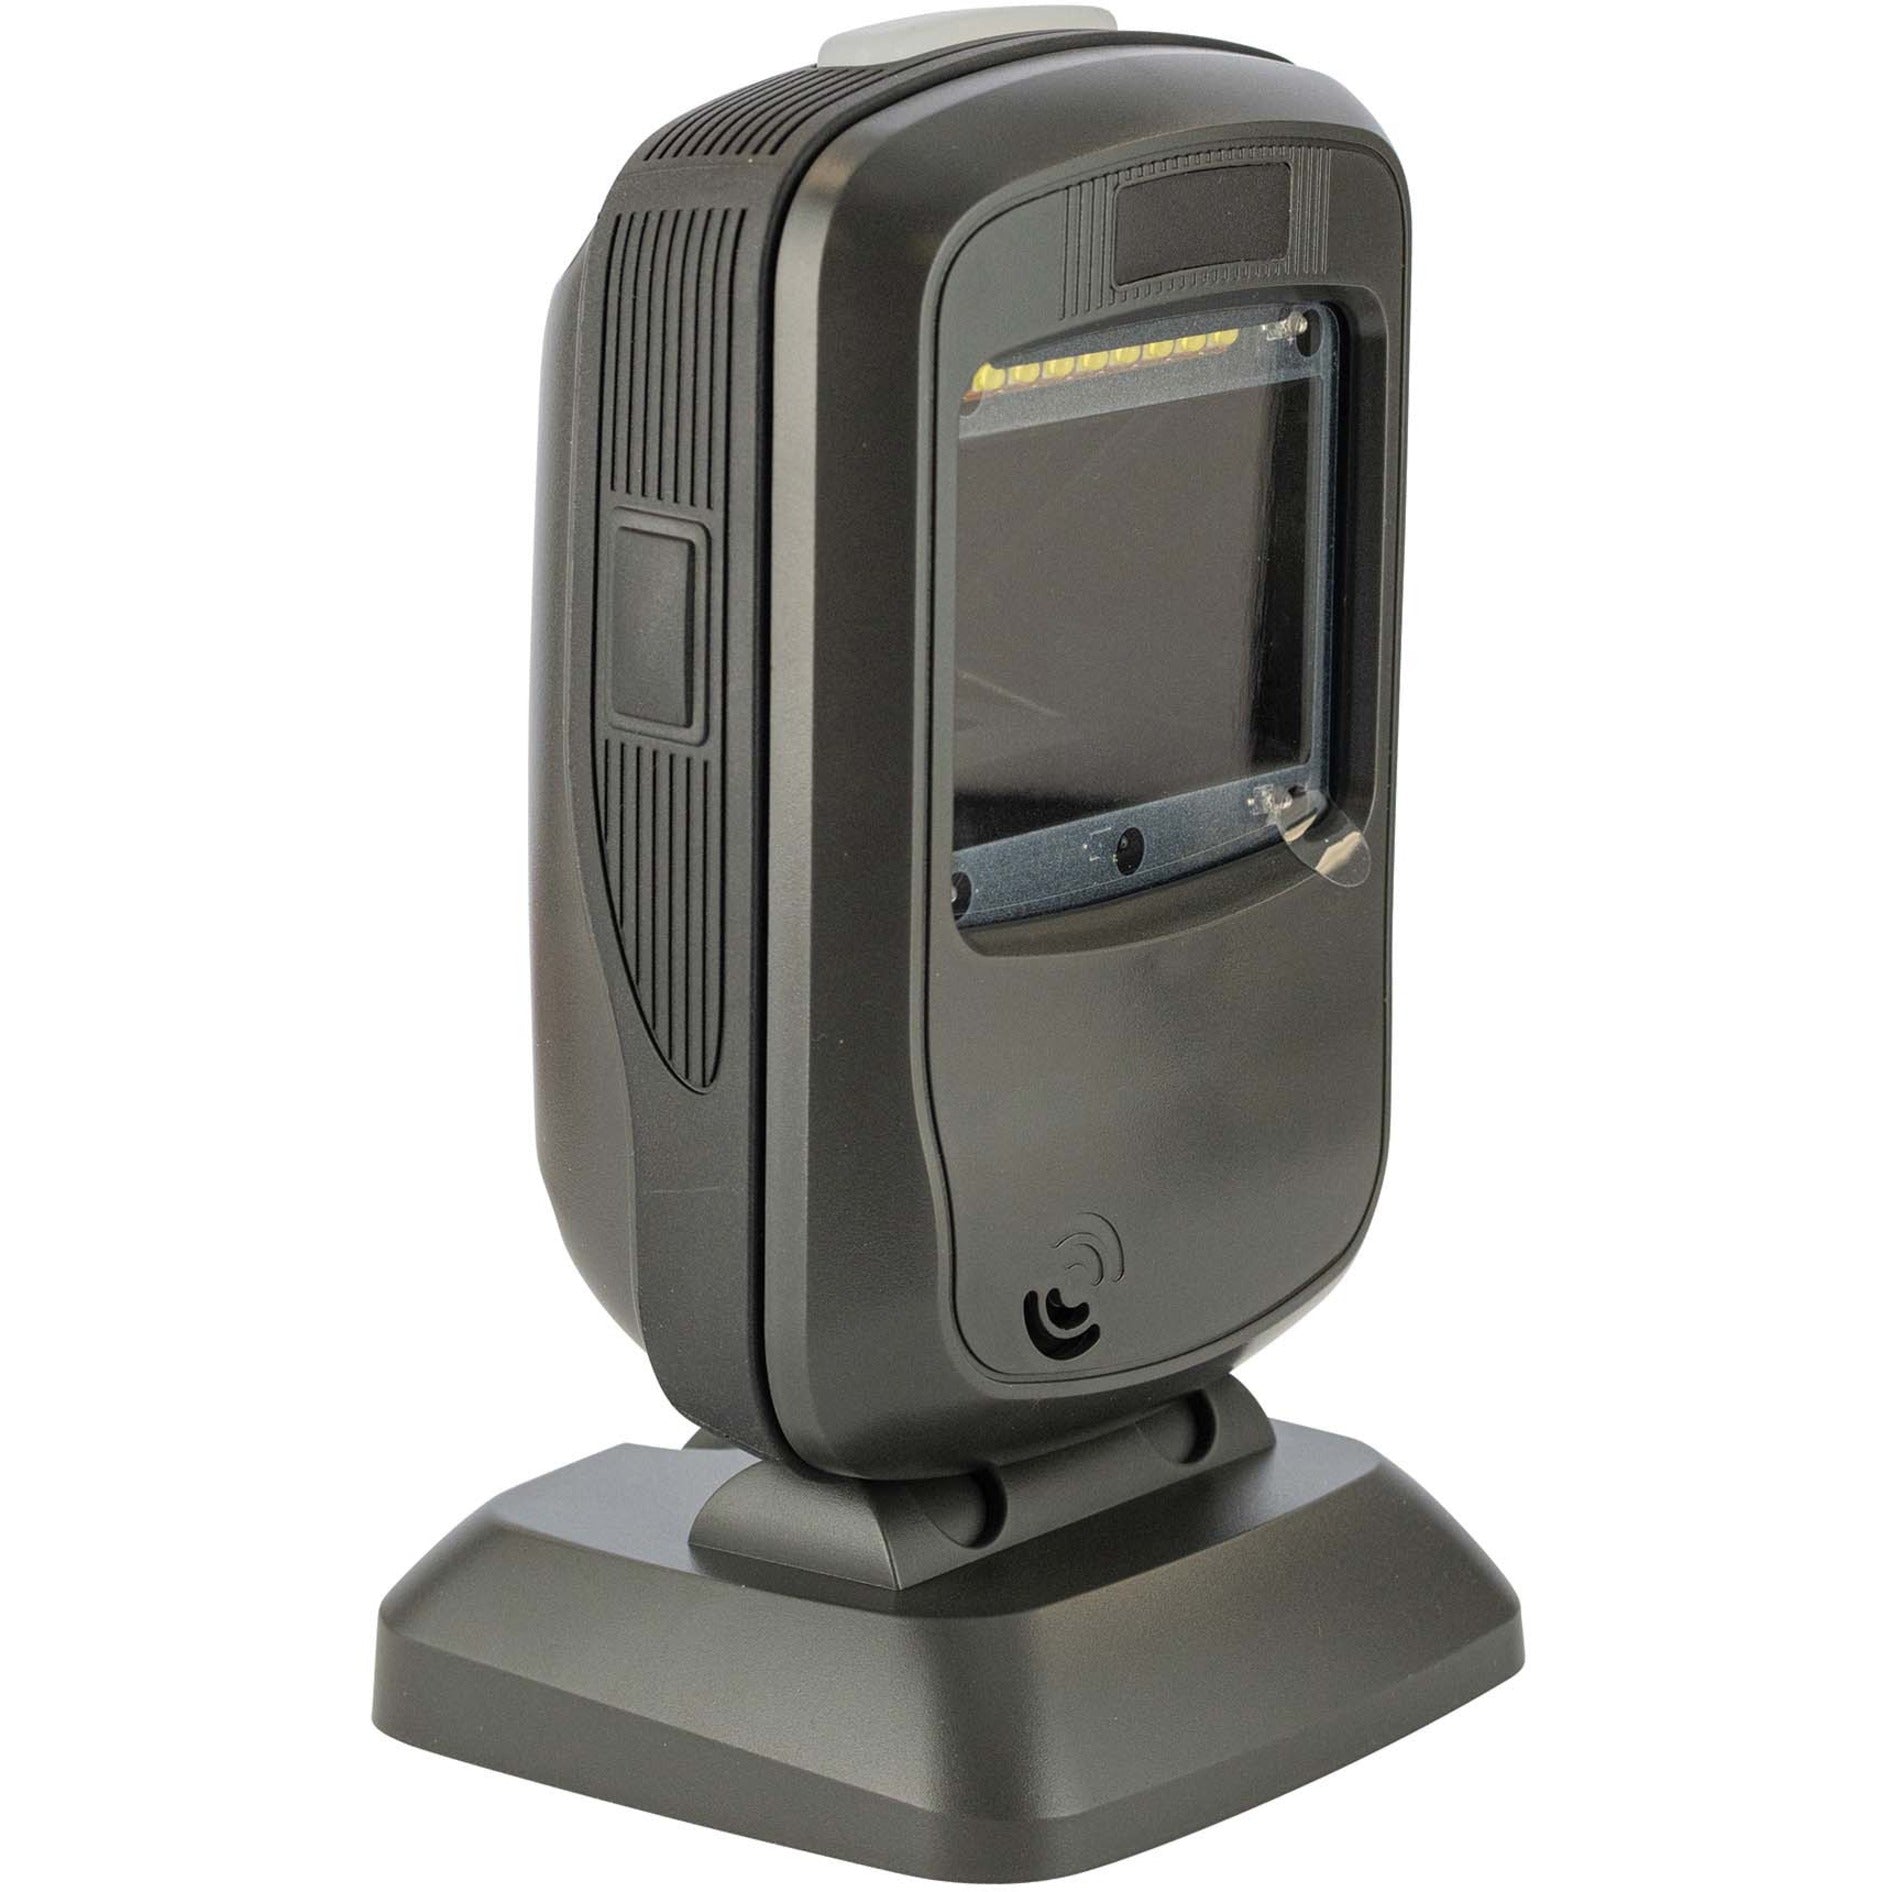 Star Micronics 37950440 Desktop Barcode Scanner, Wireless Imager, 1D/2D Scanning Capability